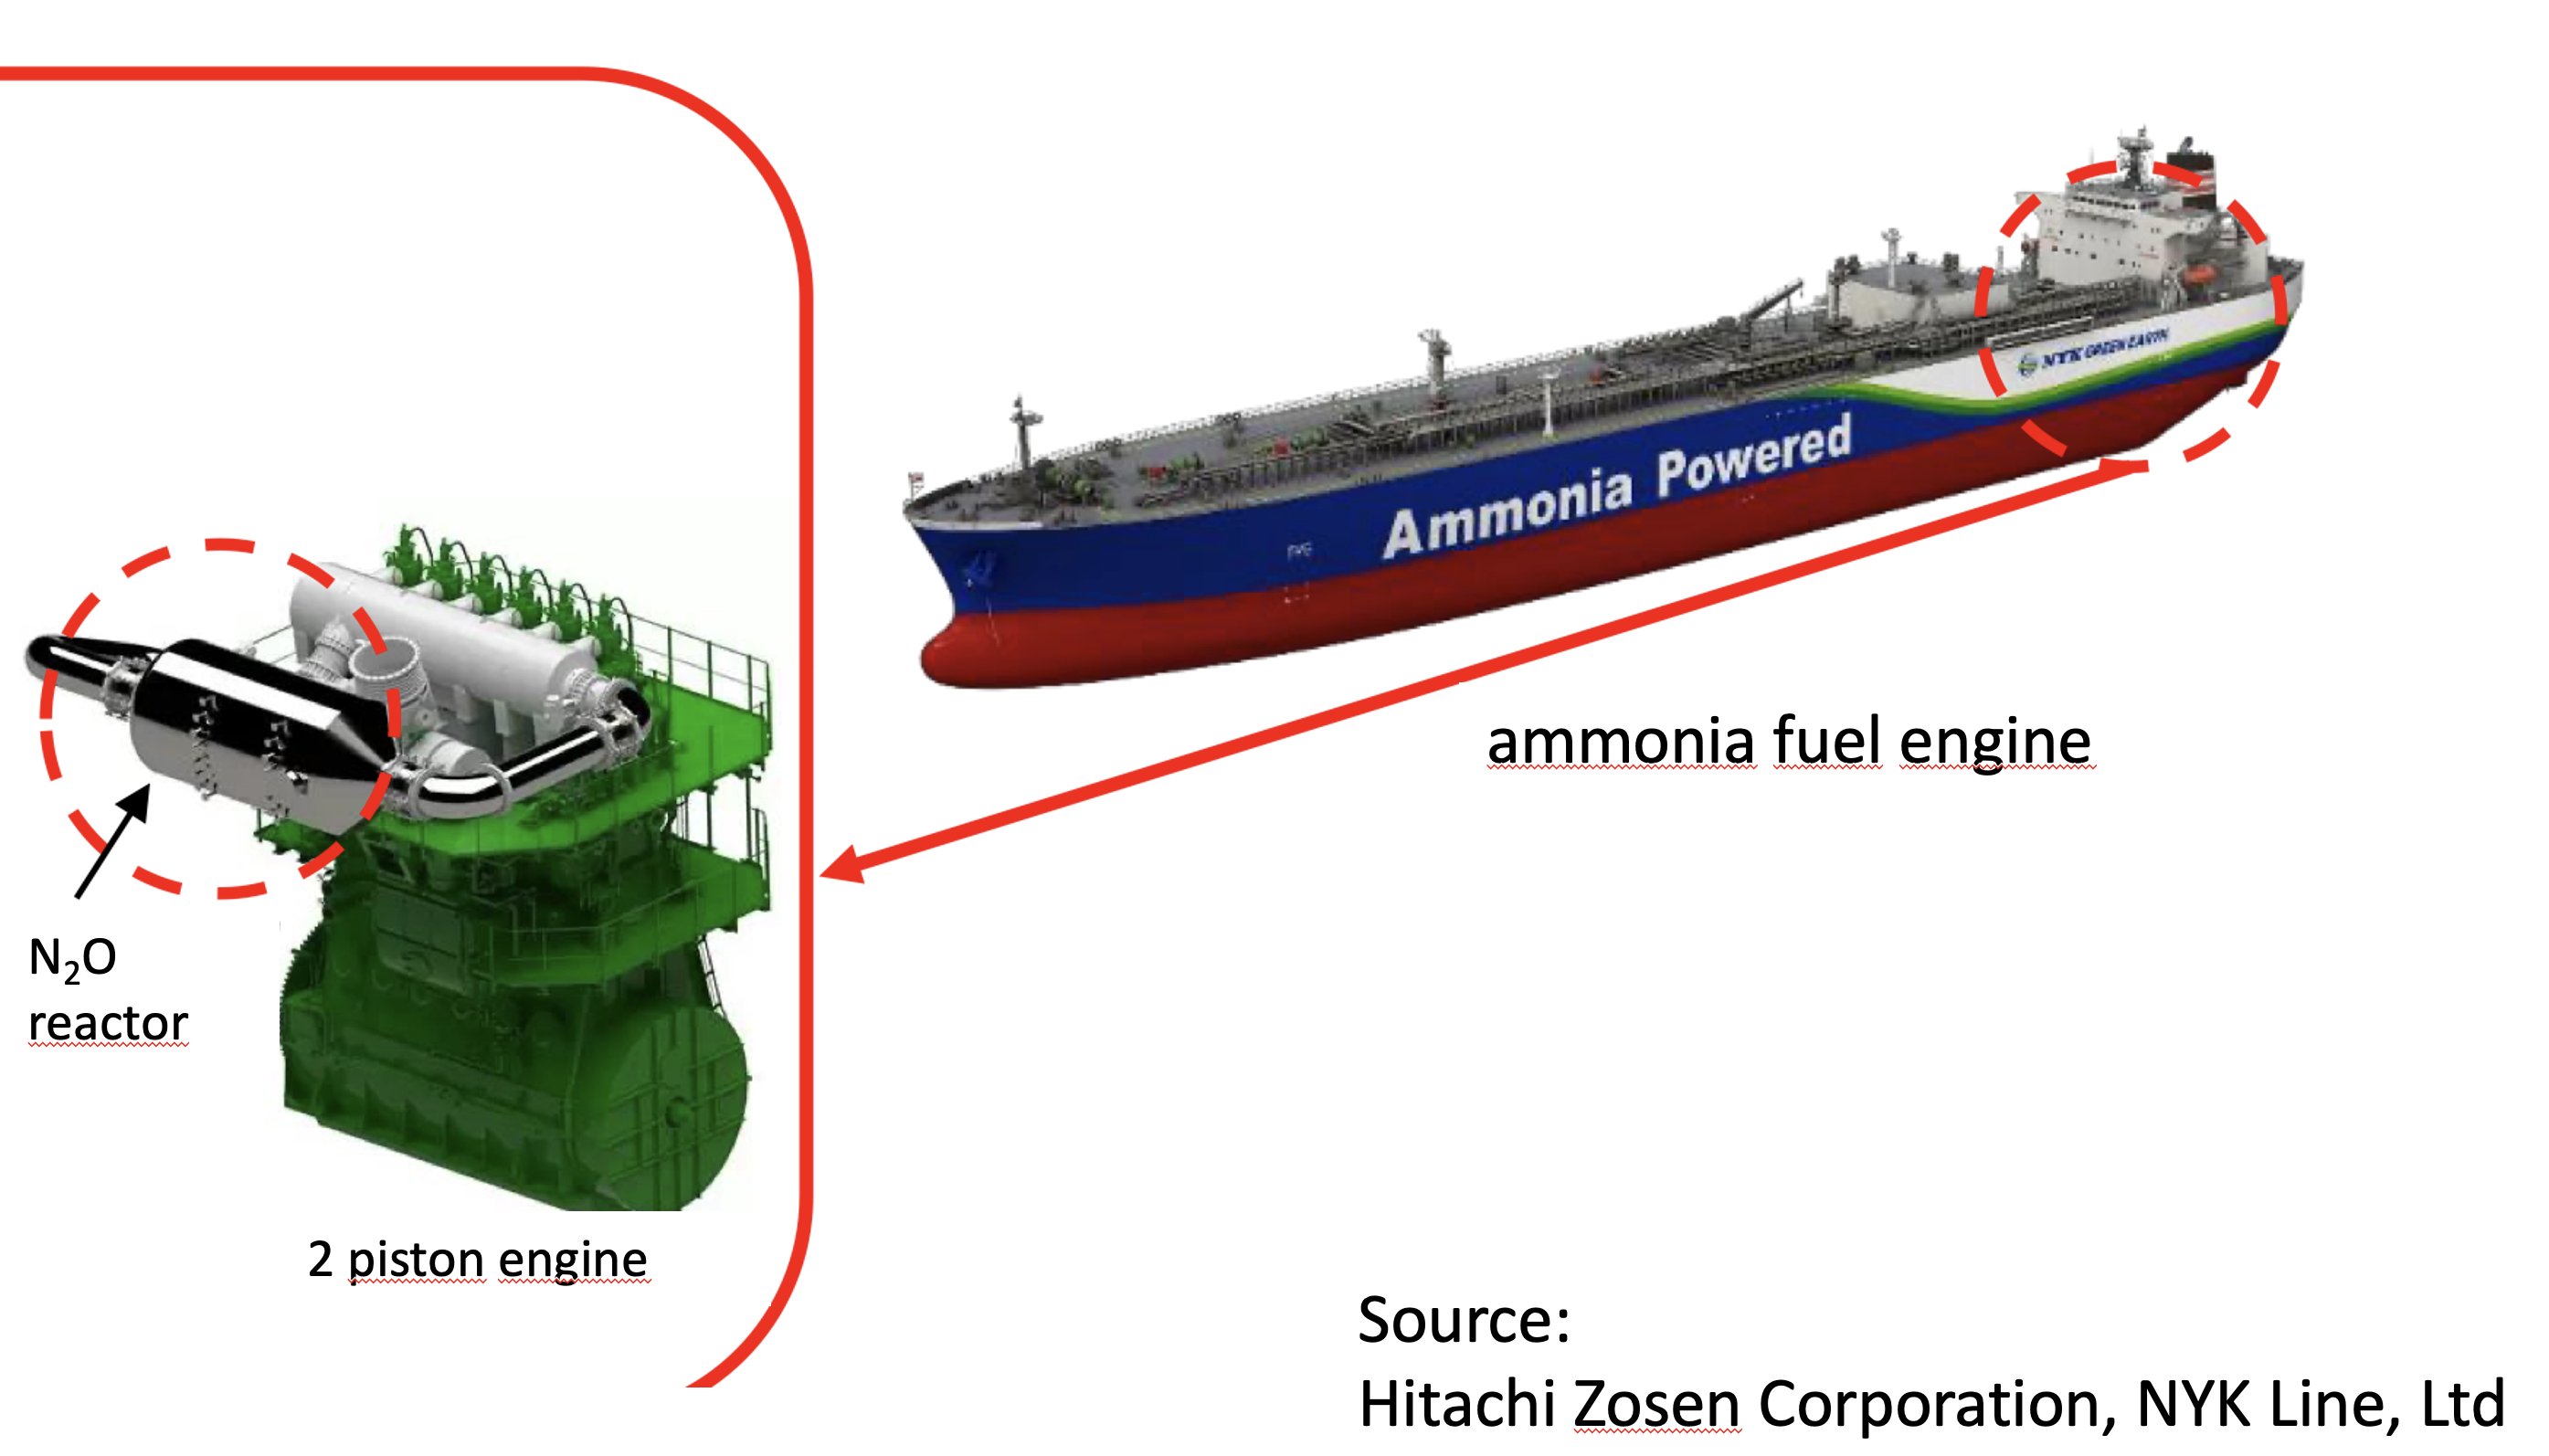 2024/03 NEDO initiates program on ammonia fuel ship engines